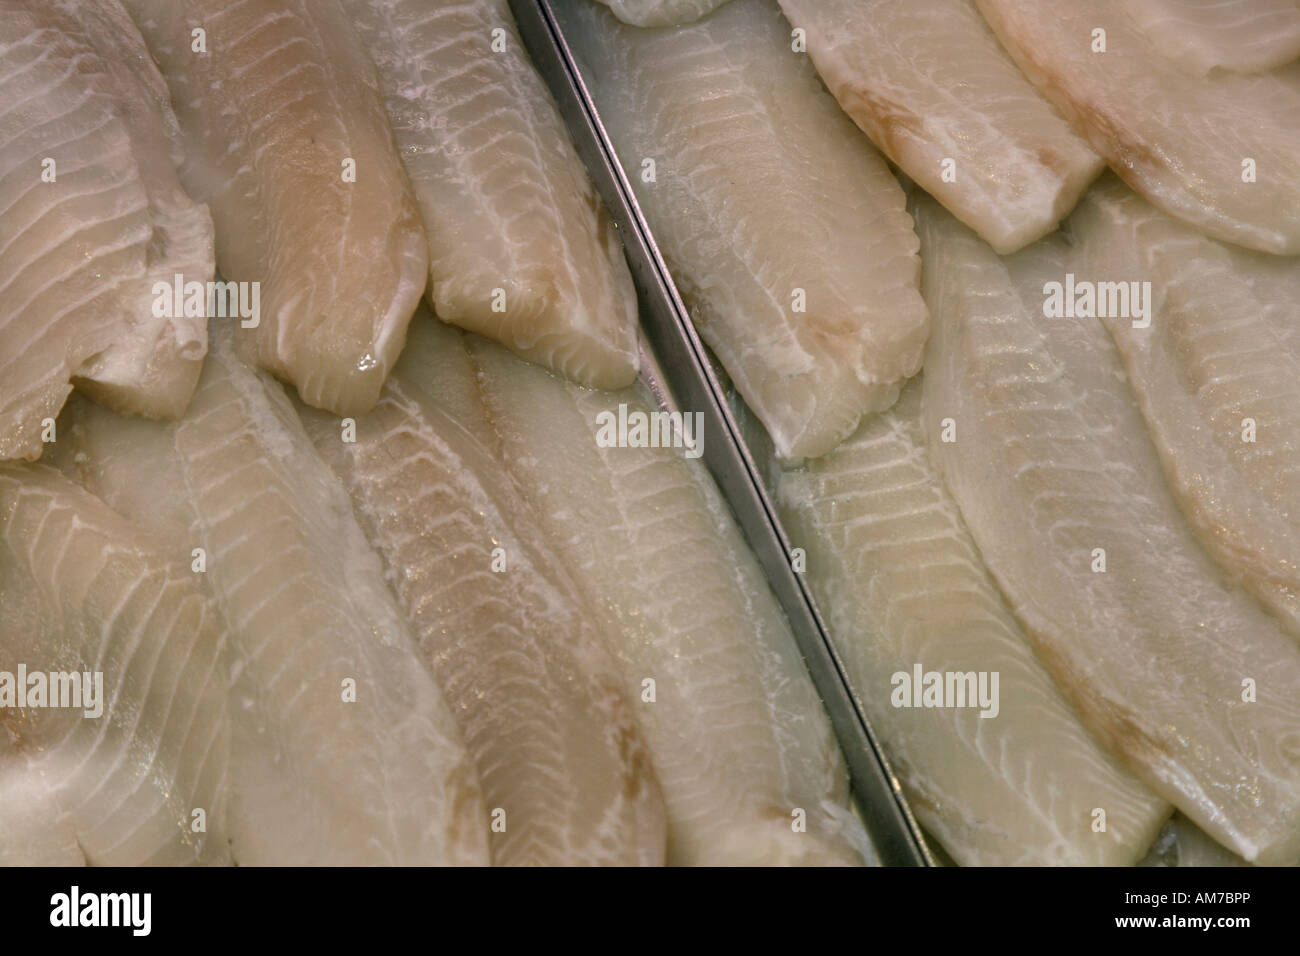 Fresh fish filets on display Stock Photo